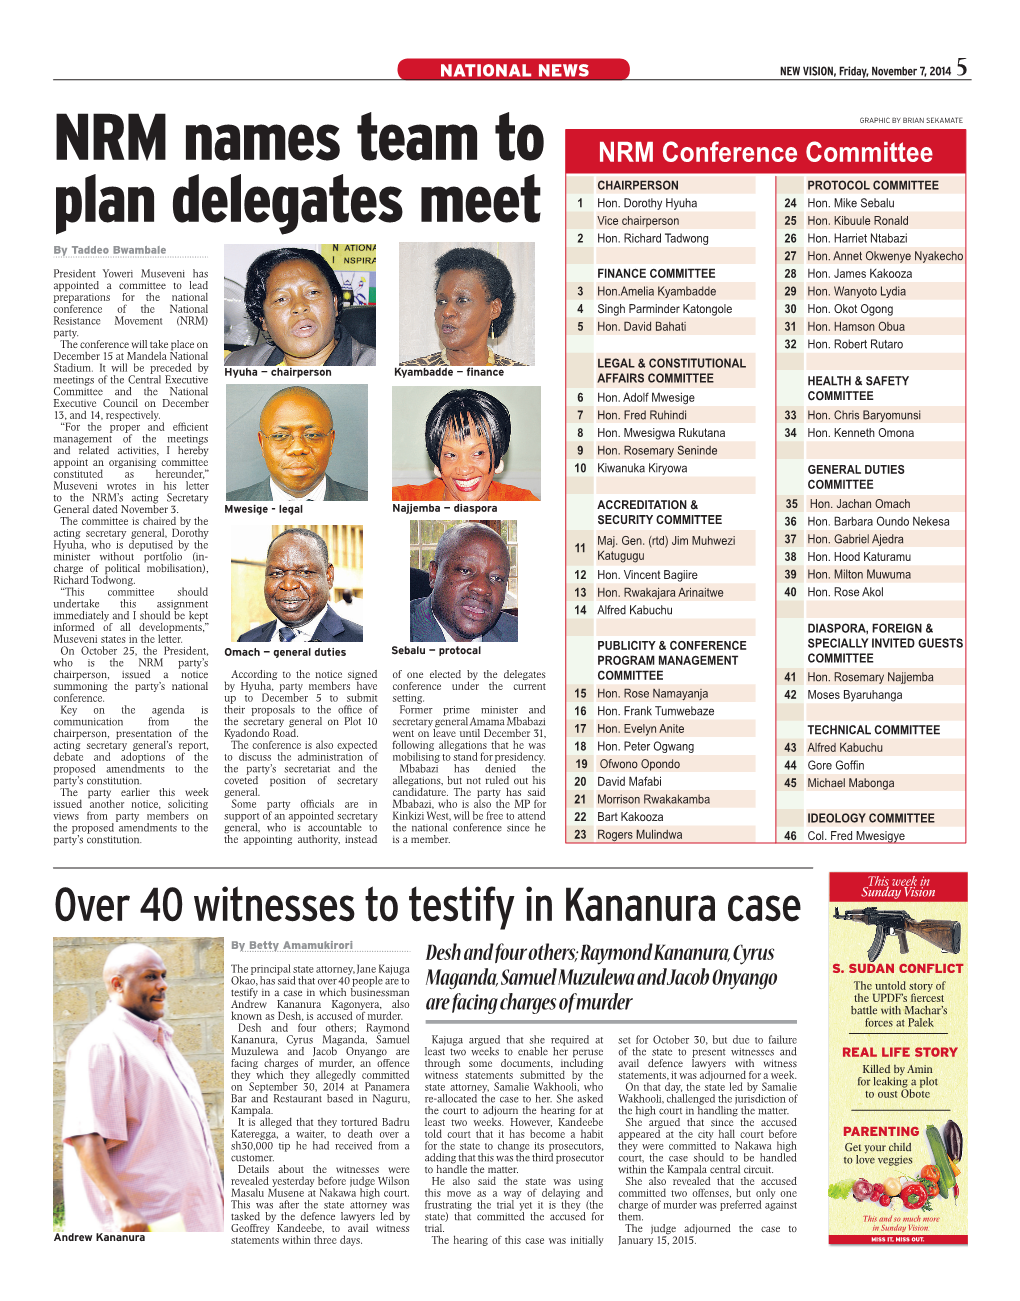 NRM Names Team to Plan Delegates Meet